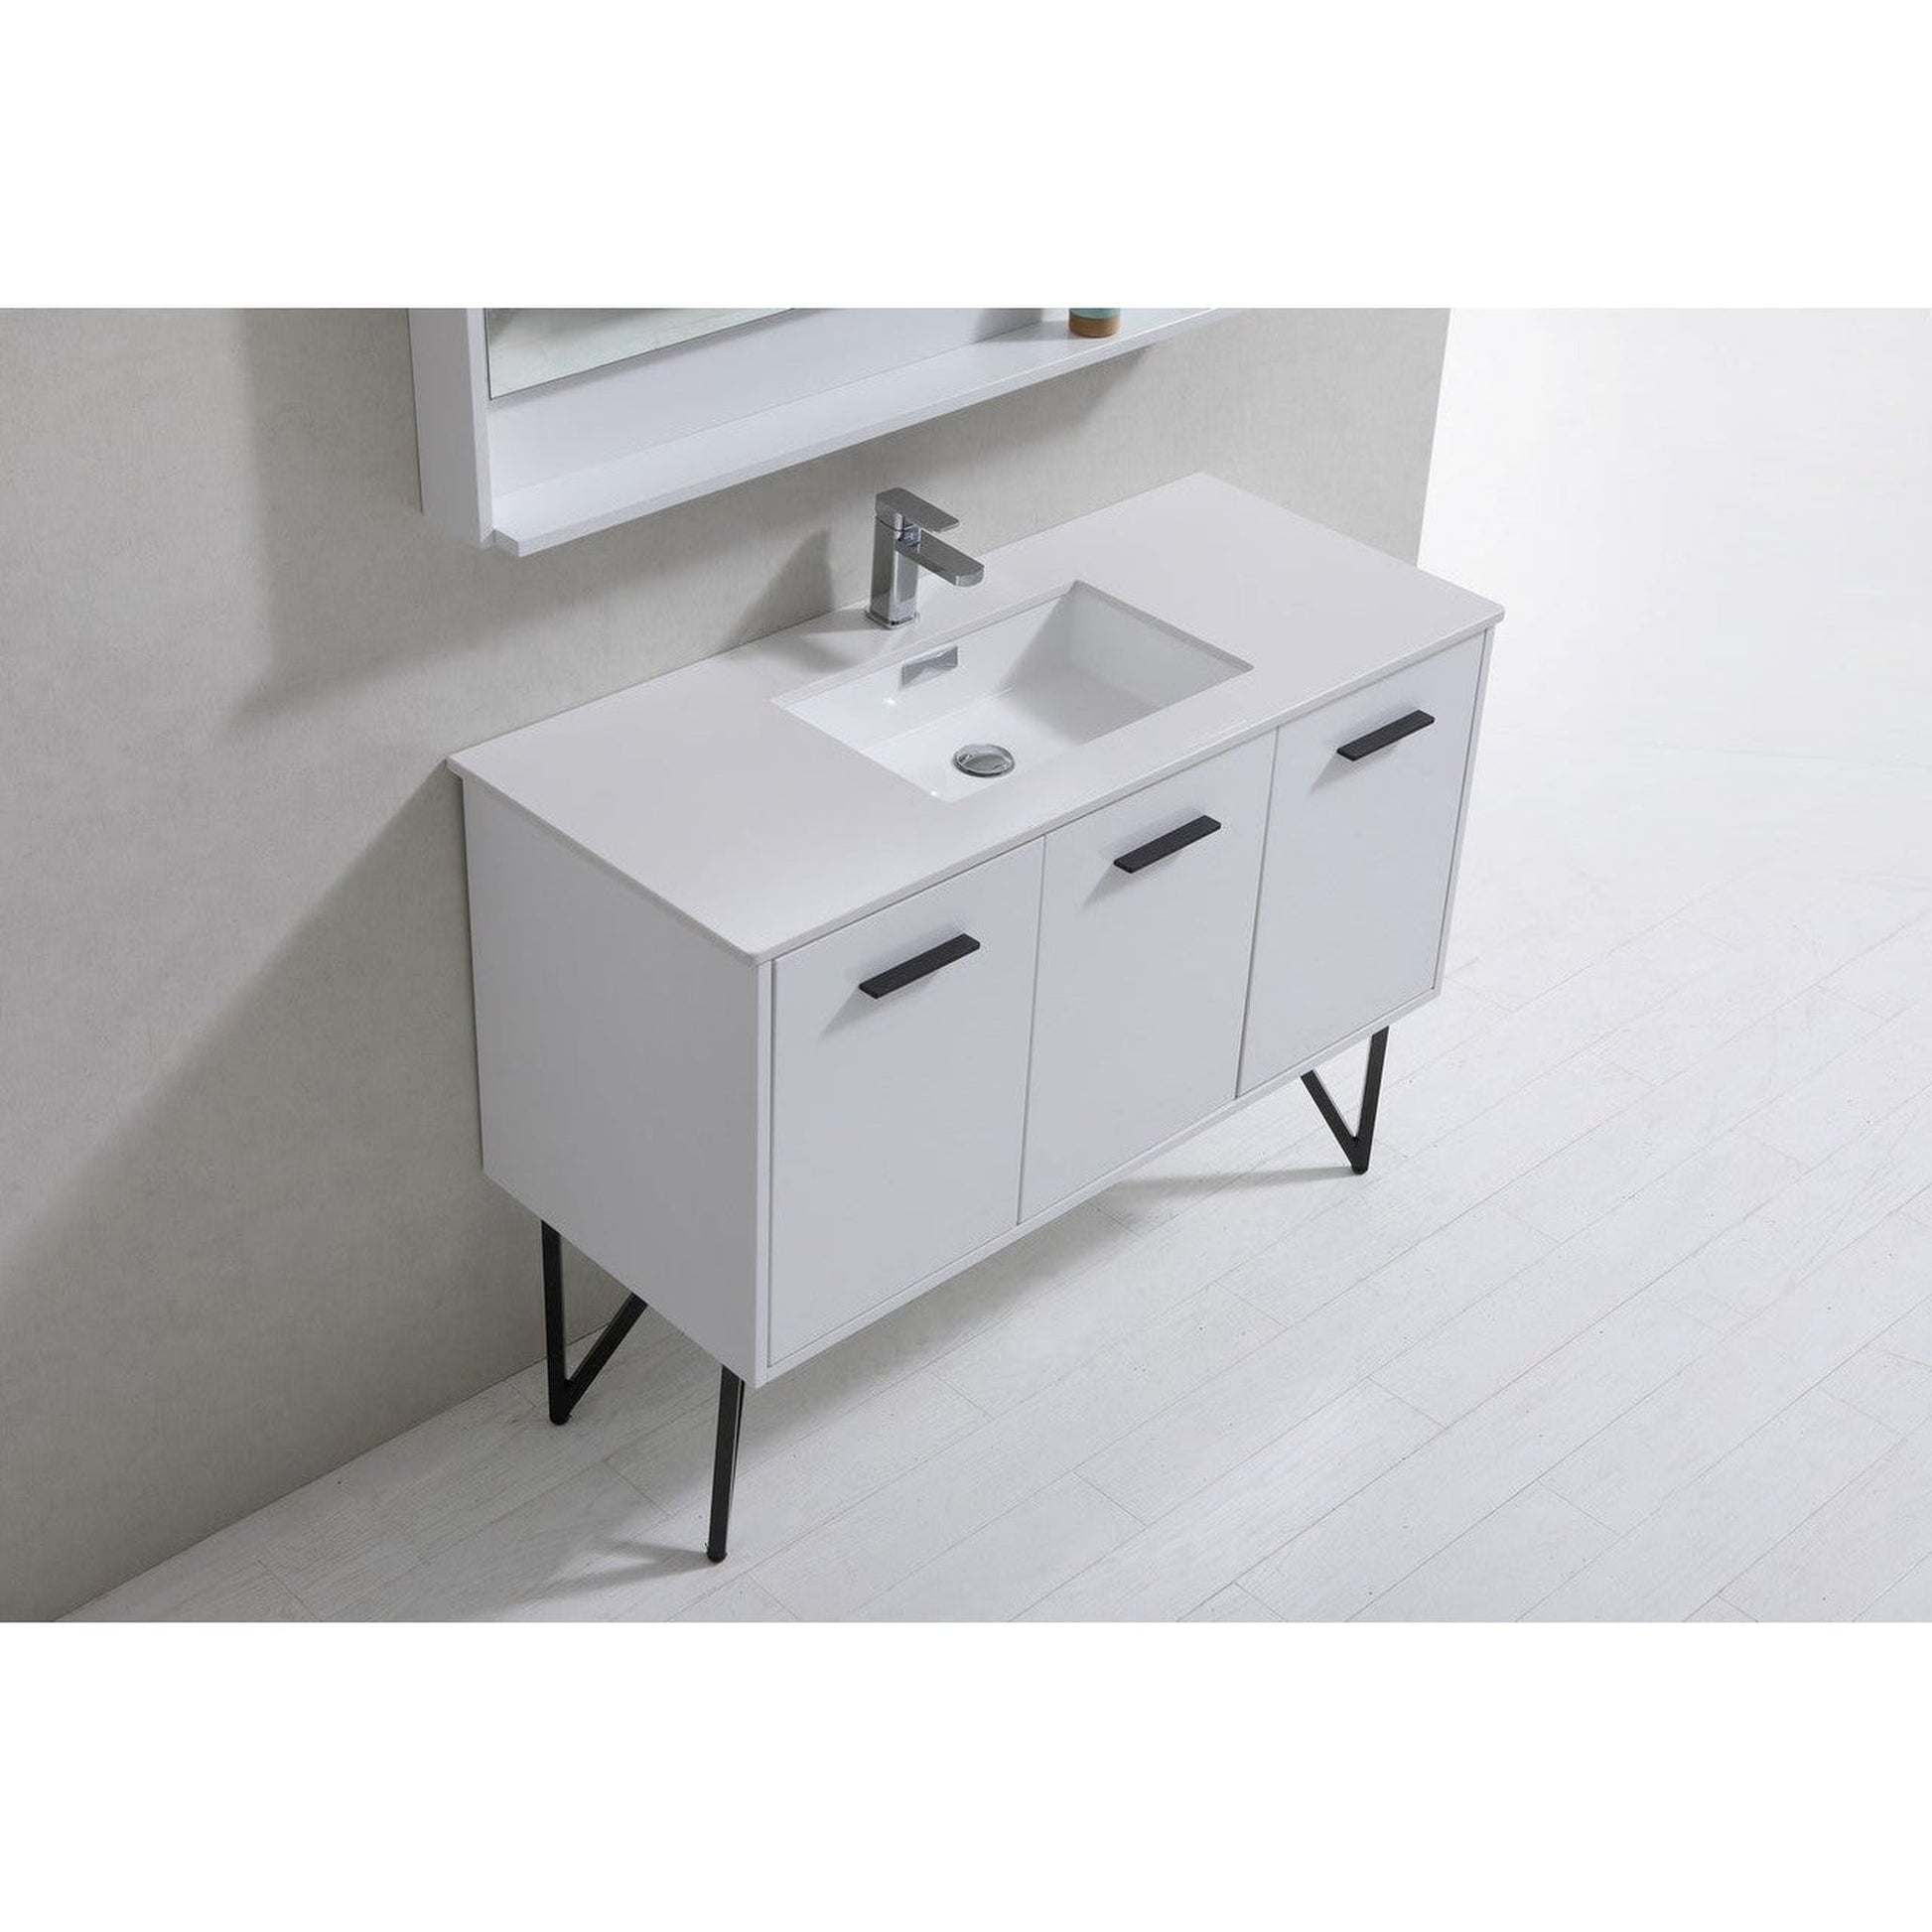 KubeBath Bosco 48" High Gloss White Modern Freestanding Bathroom Vanity With Single Undermount Sink With Overflow